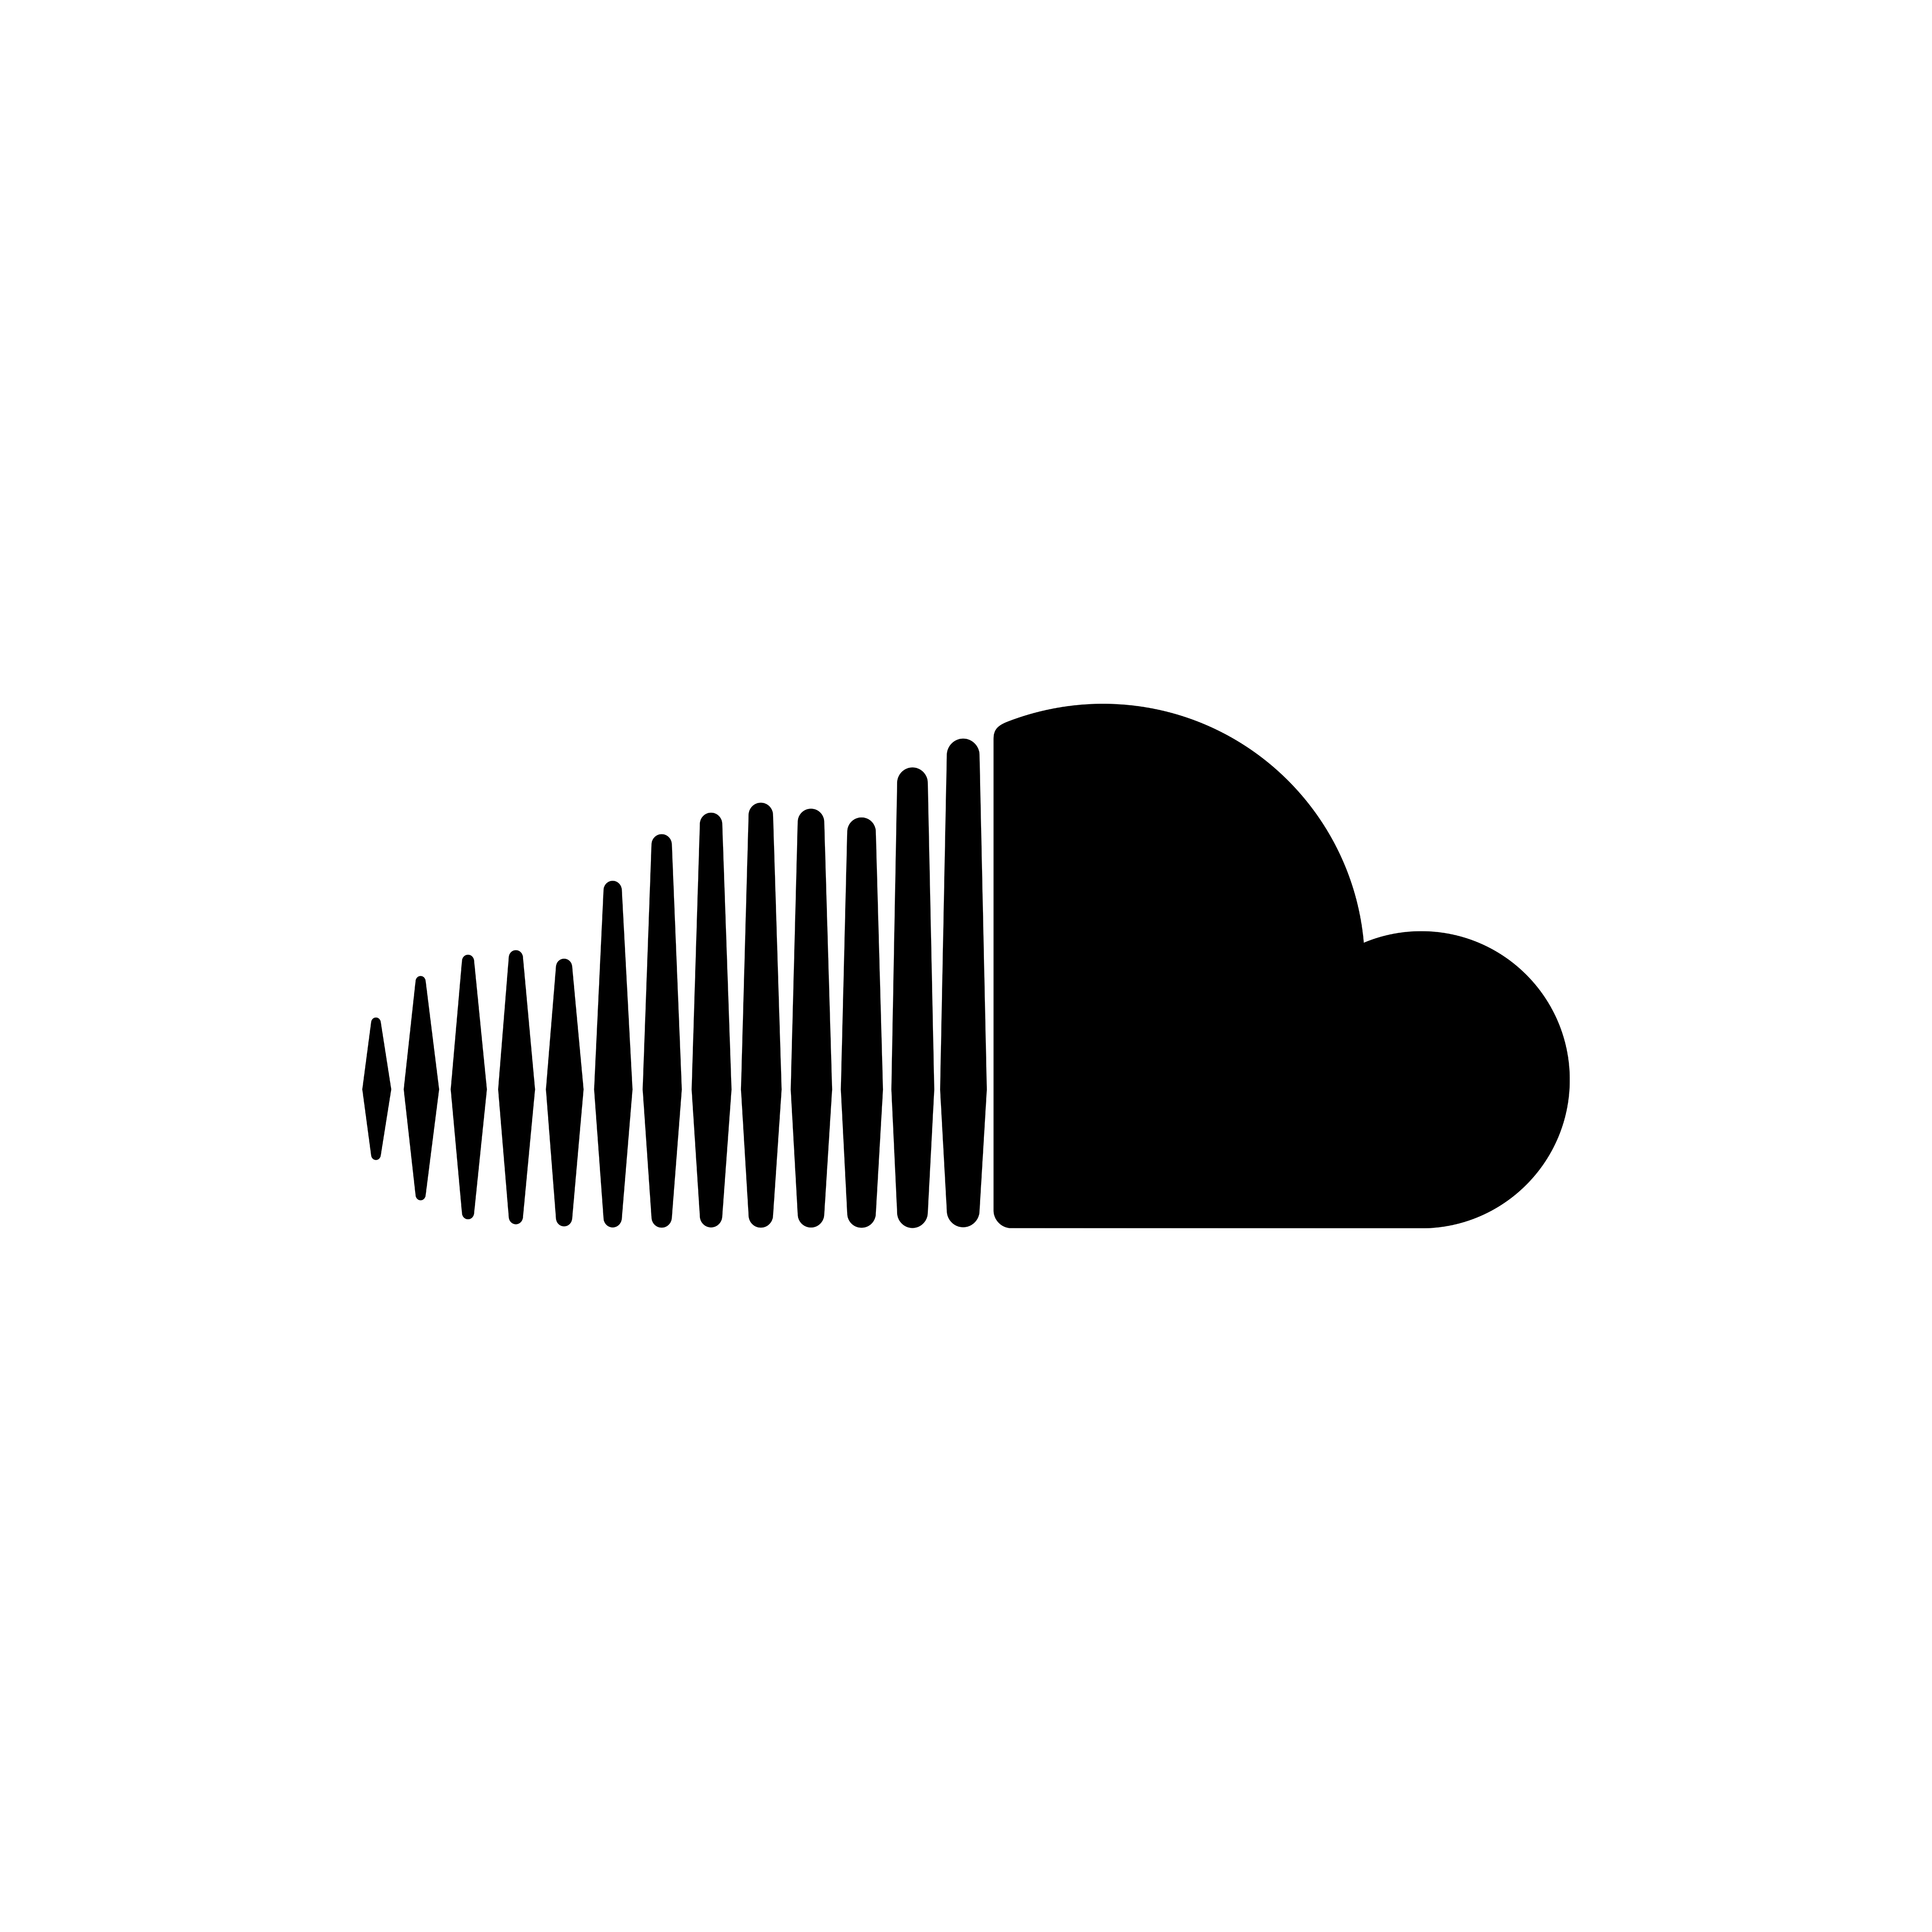 Transparent SoundCloud Logo - PNG and SVG soundcloud black icons for free download